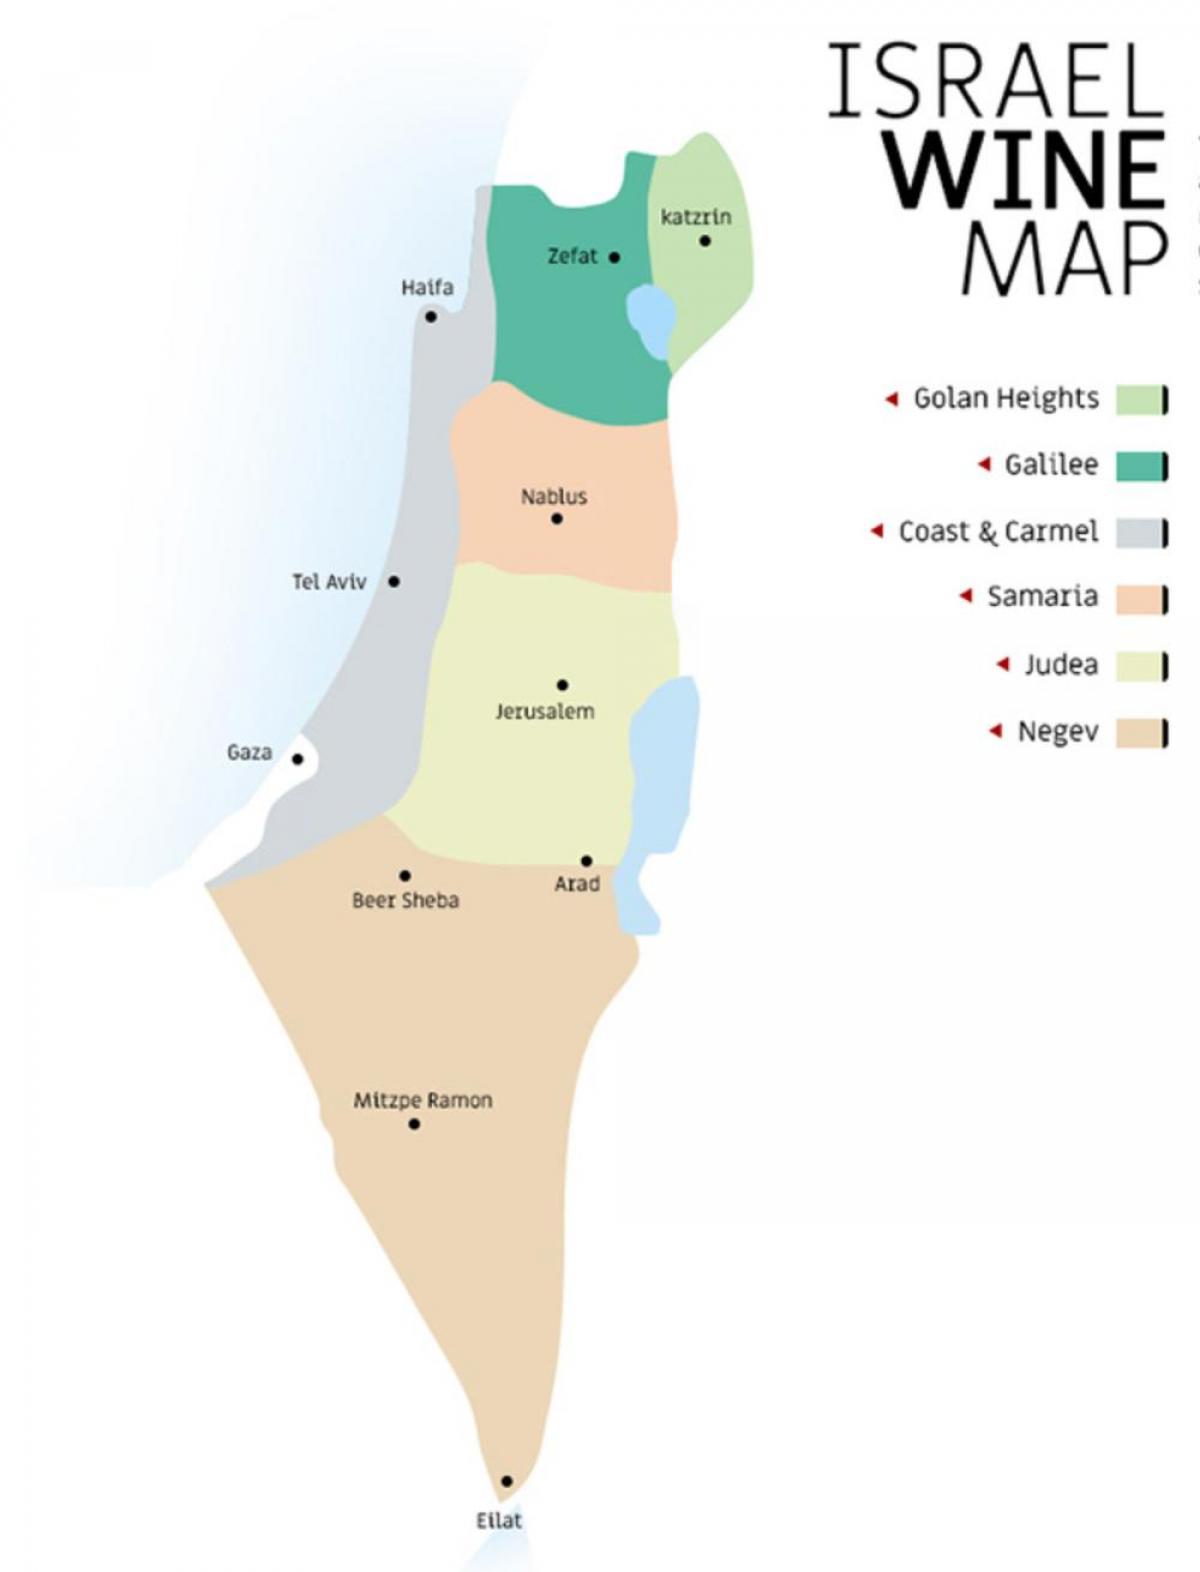 Izraelska mapa winnic